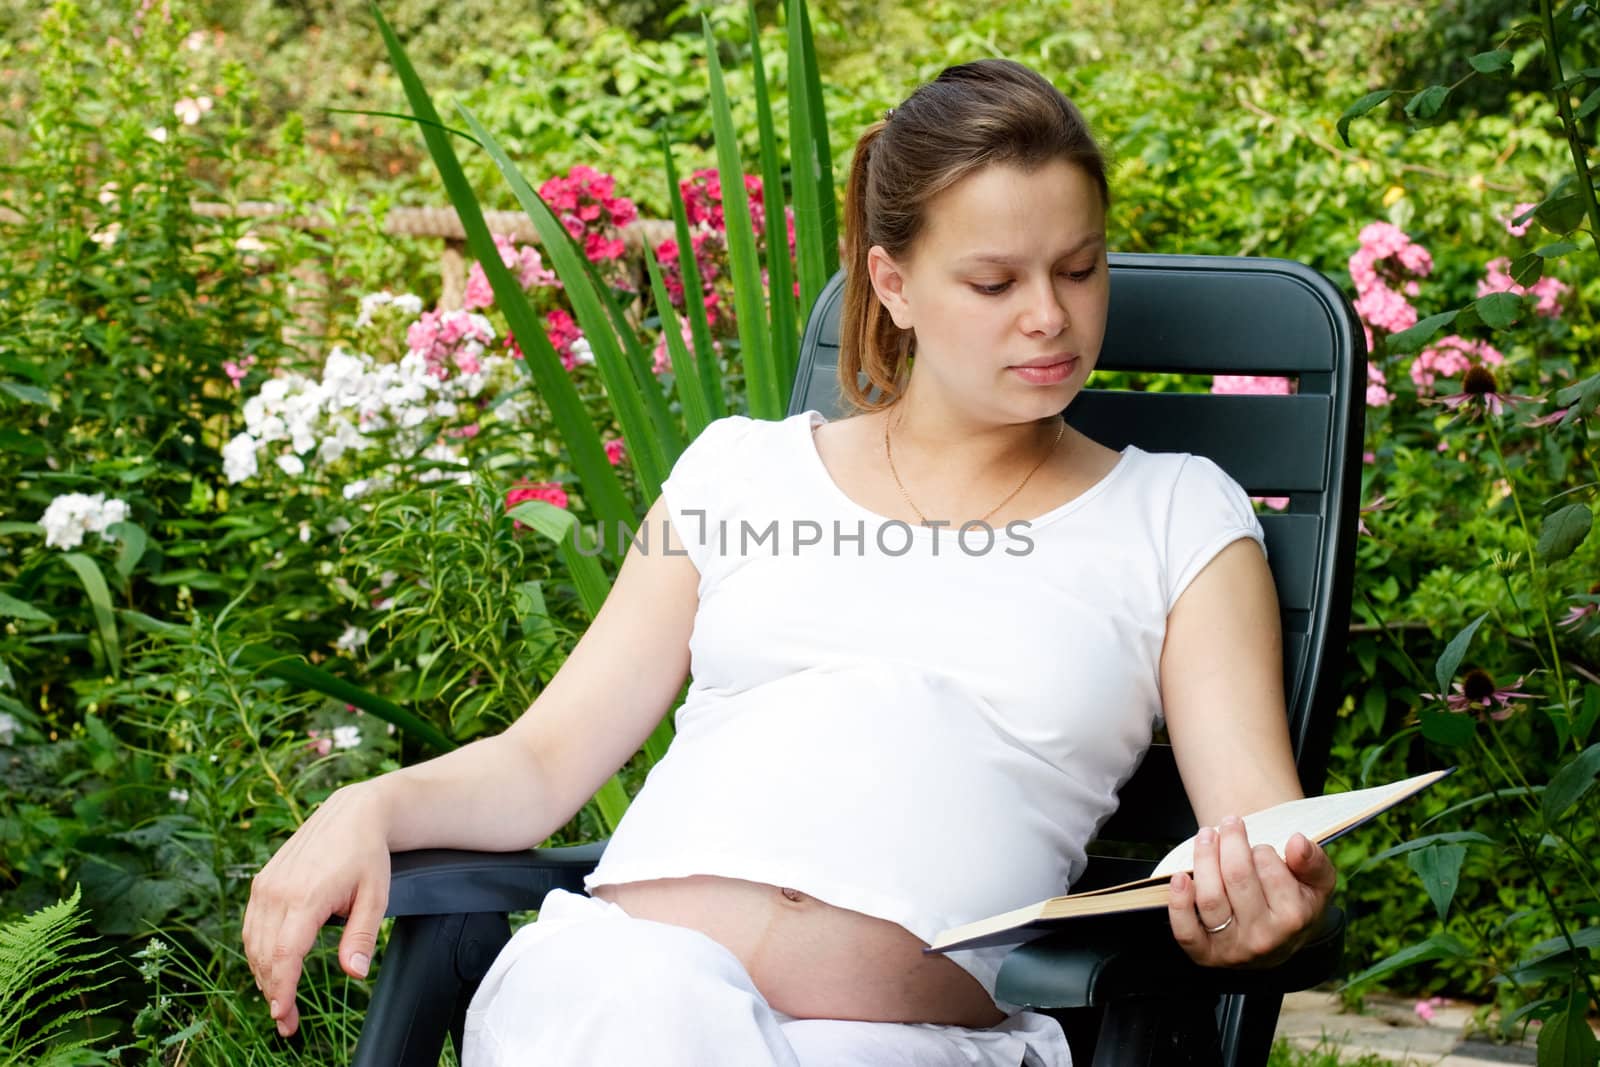 Young pregnant woman reading a book in a summer garden